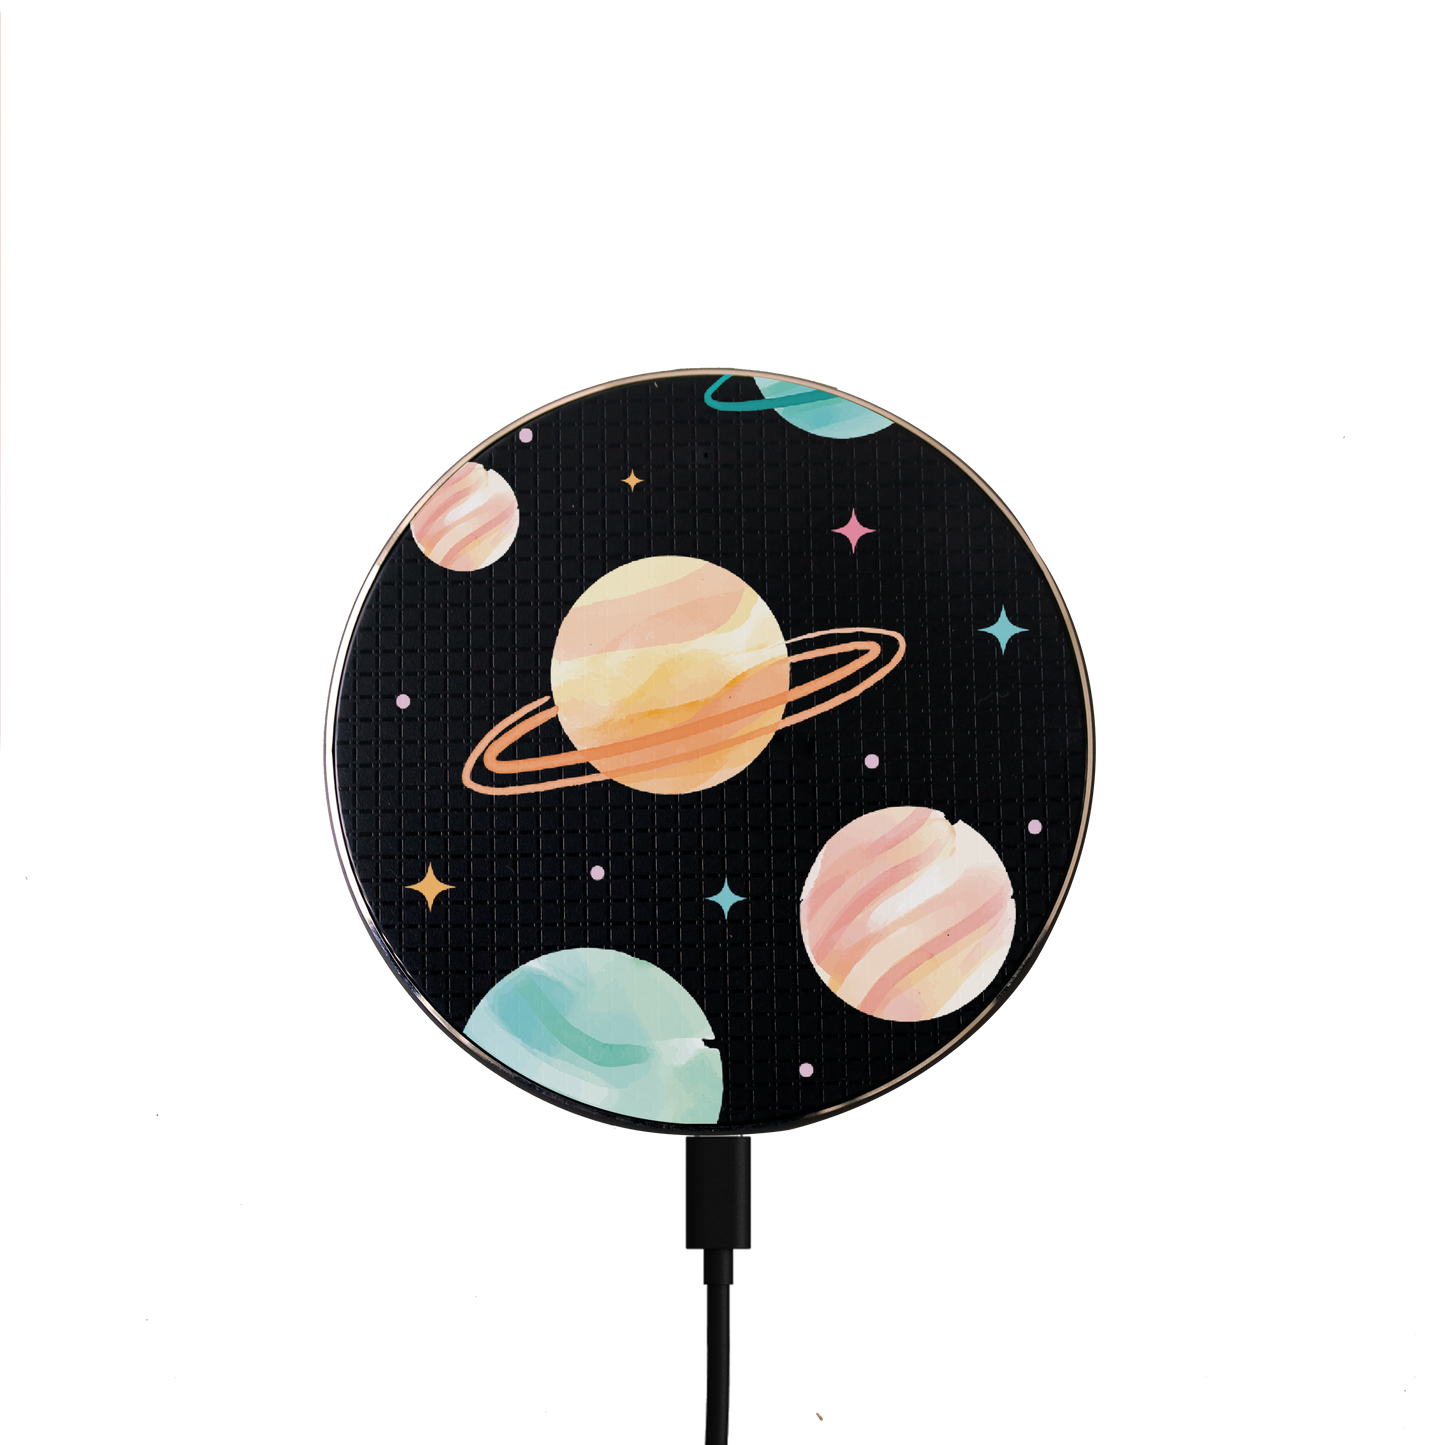 Universal Wireless Charger - Planetarium 1.0